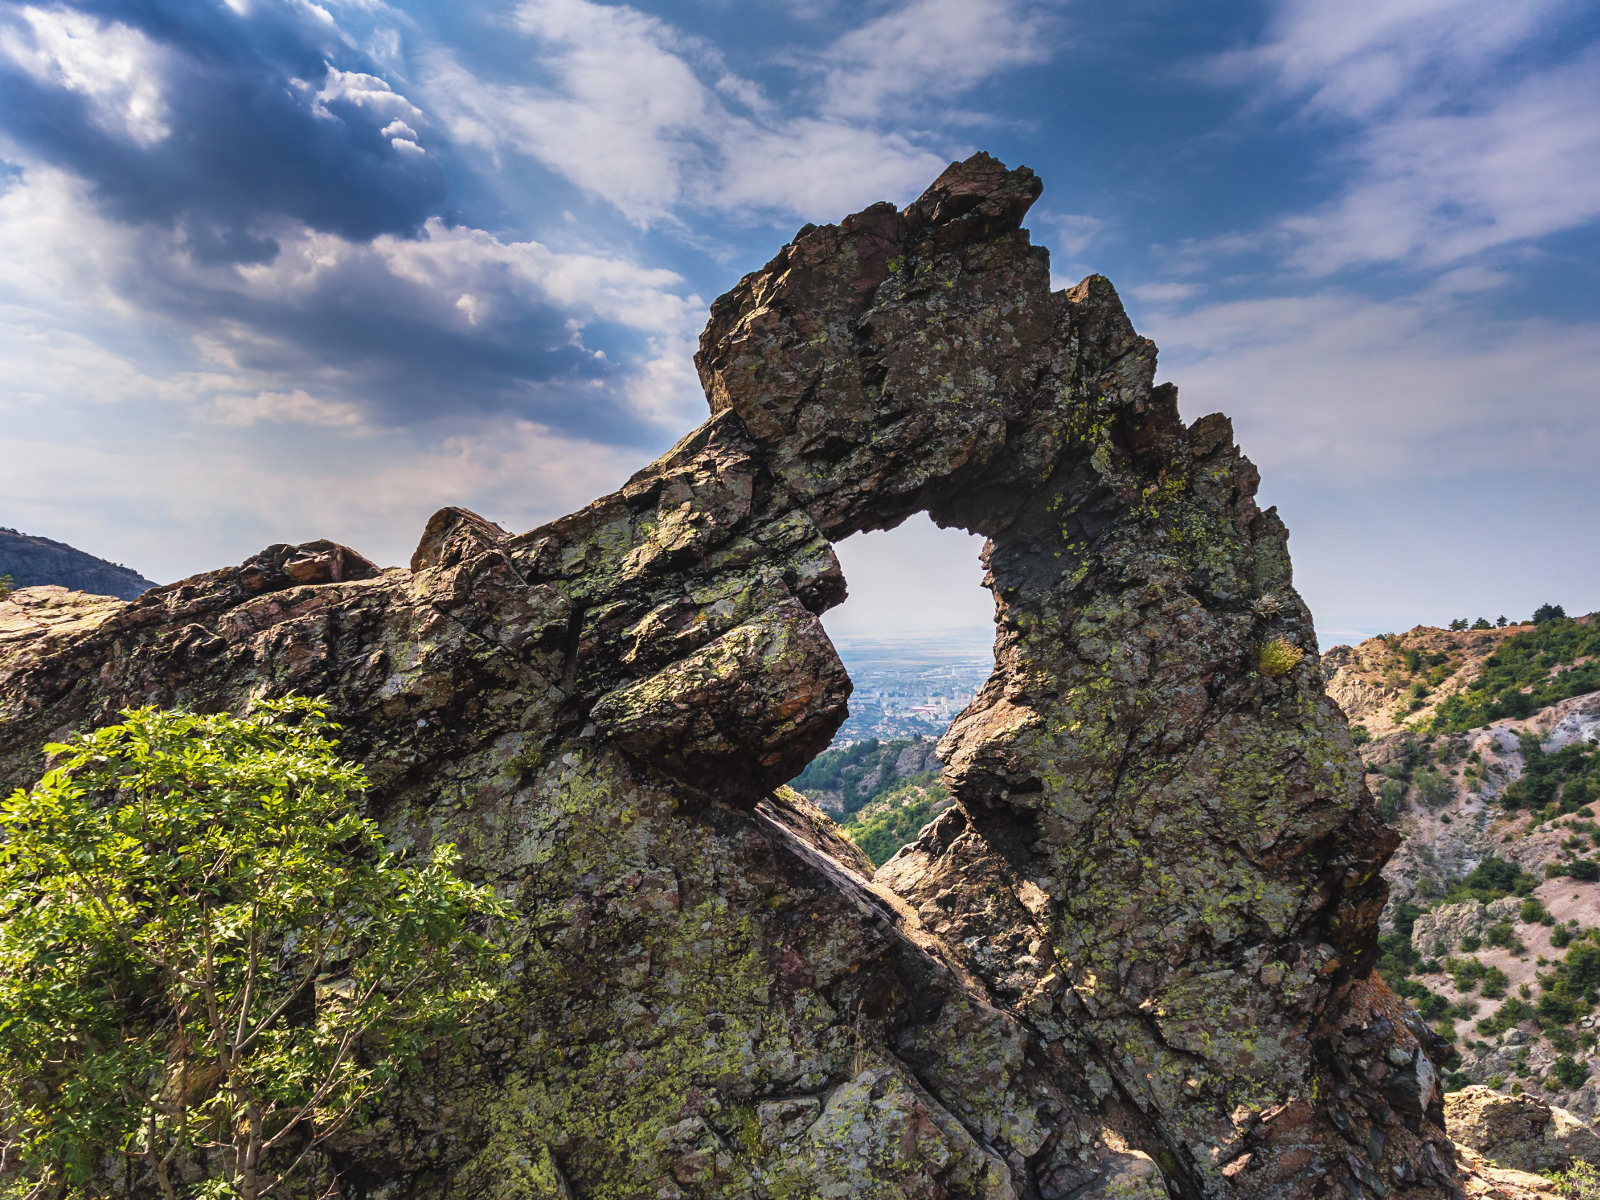 Bulgaria rocks: a hiker's guide to five geological wonders